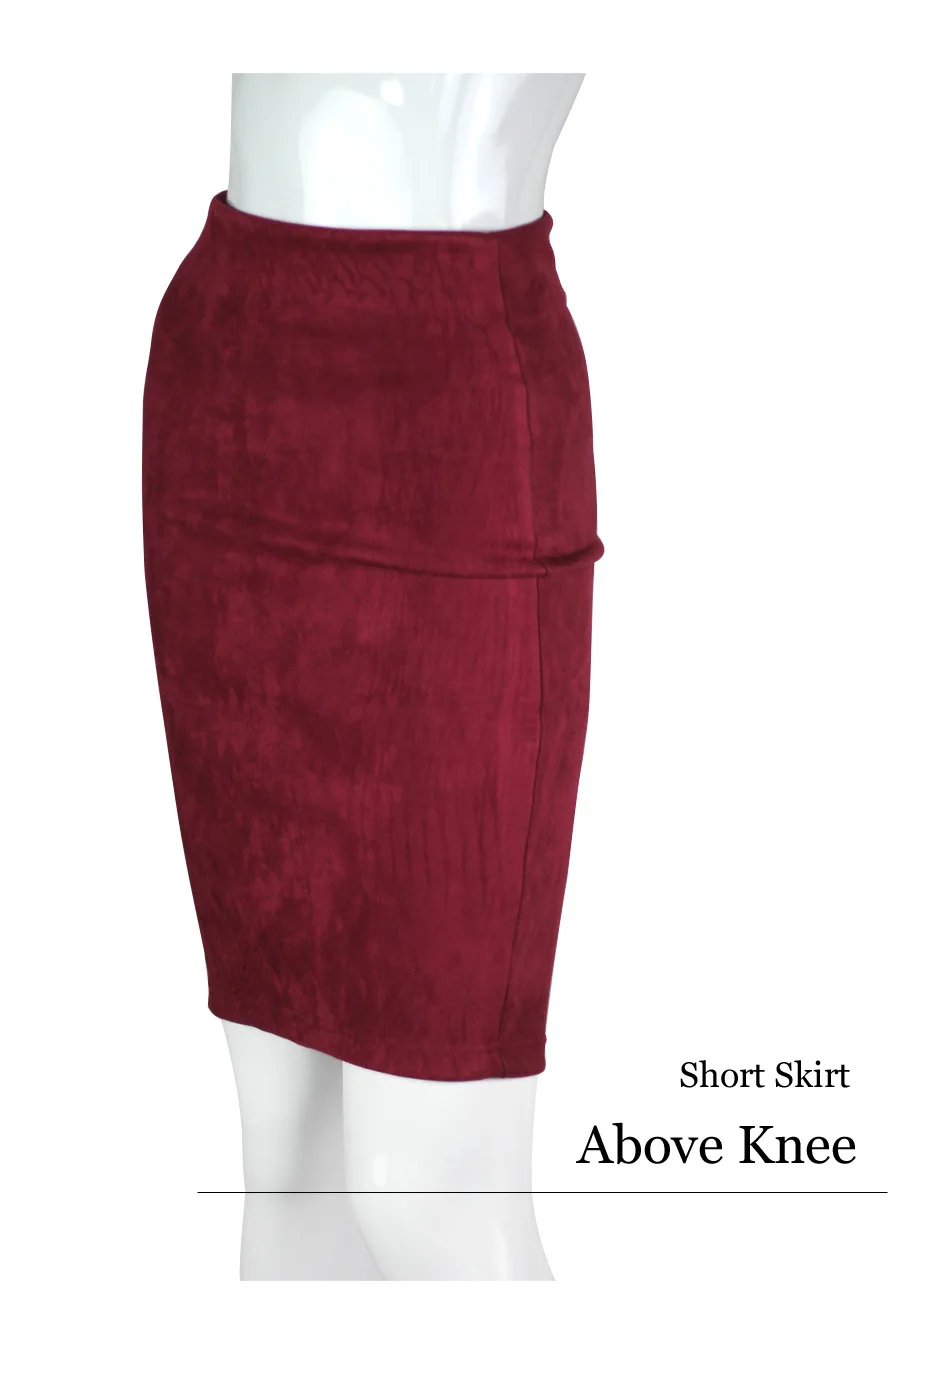 Super Deals Fashion Women Suede Solid Color Pencil Skirt Female Spring Autumn Basic High Waist Bodycon Split Knee Length Skirts